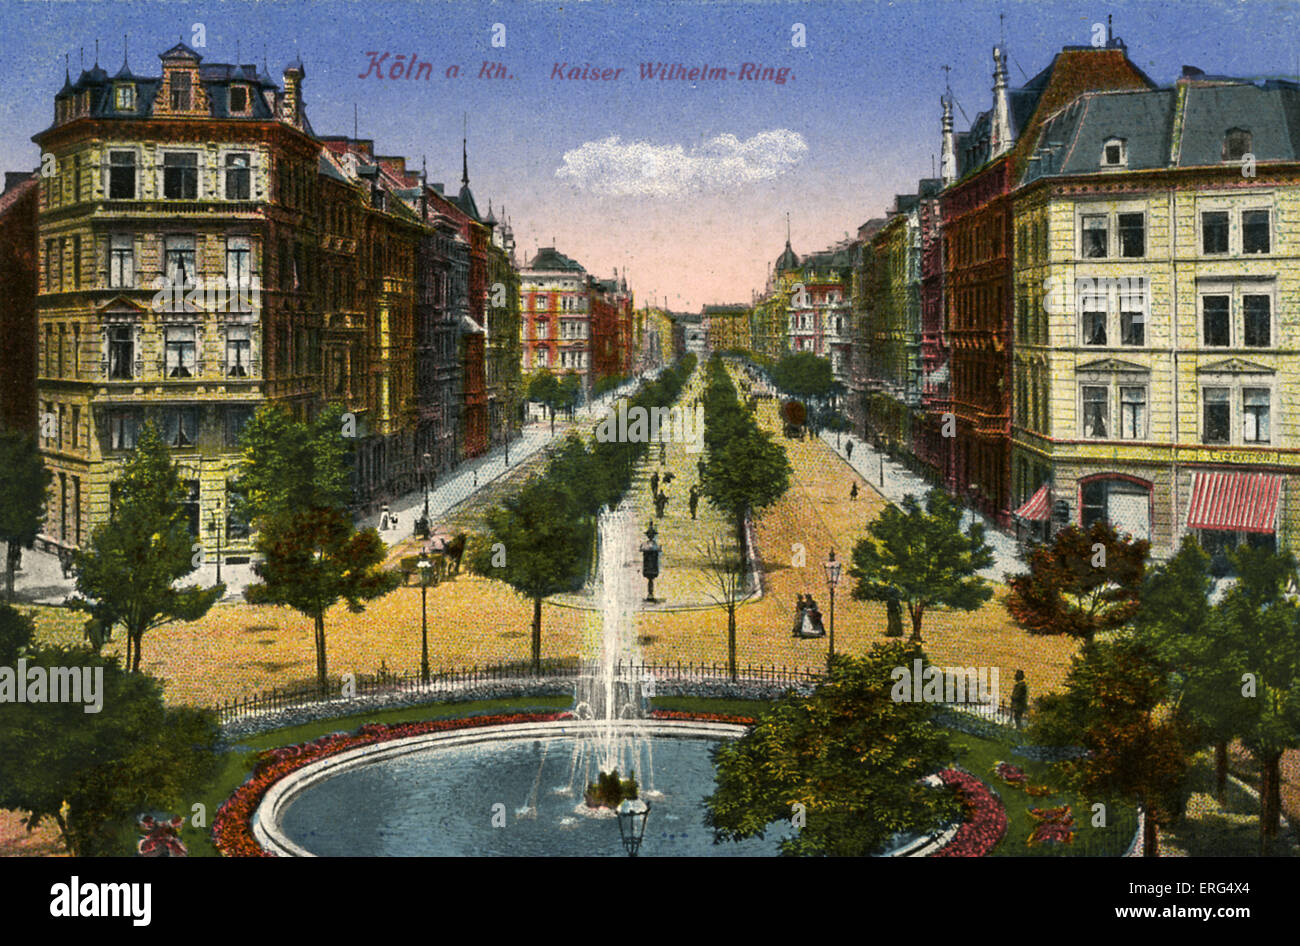 Köln, Deutschland, Anfang des 20. Jahrhunderts. Kaiser-Wilhelm-Ring.  Postkarte Stockfotografie - Alamy